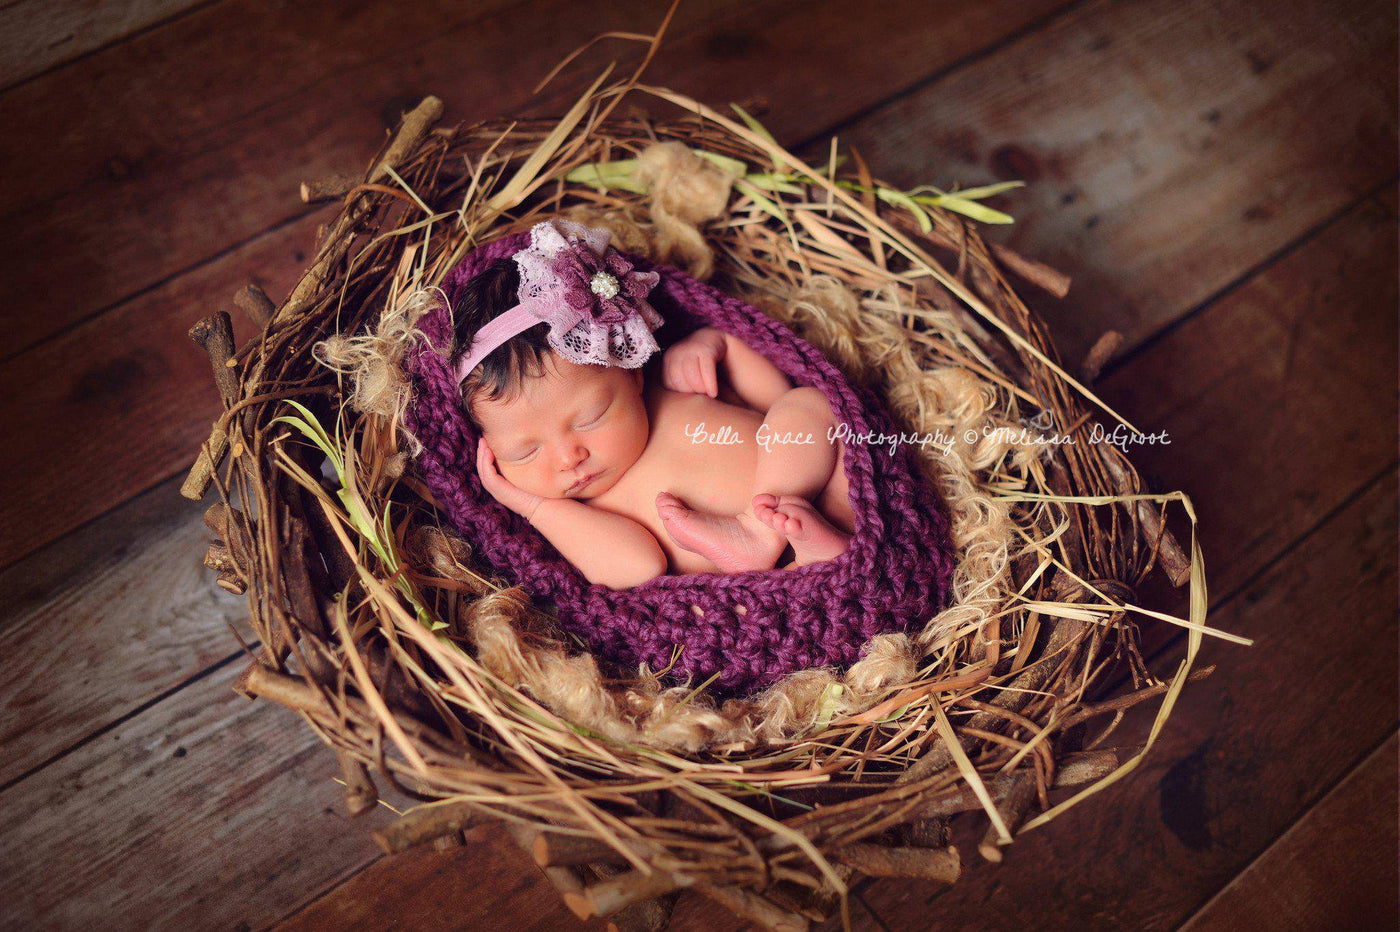 Plum Purple Baby Bowl And Hat Set - Beautiful Photo Props